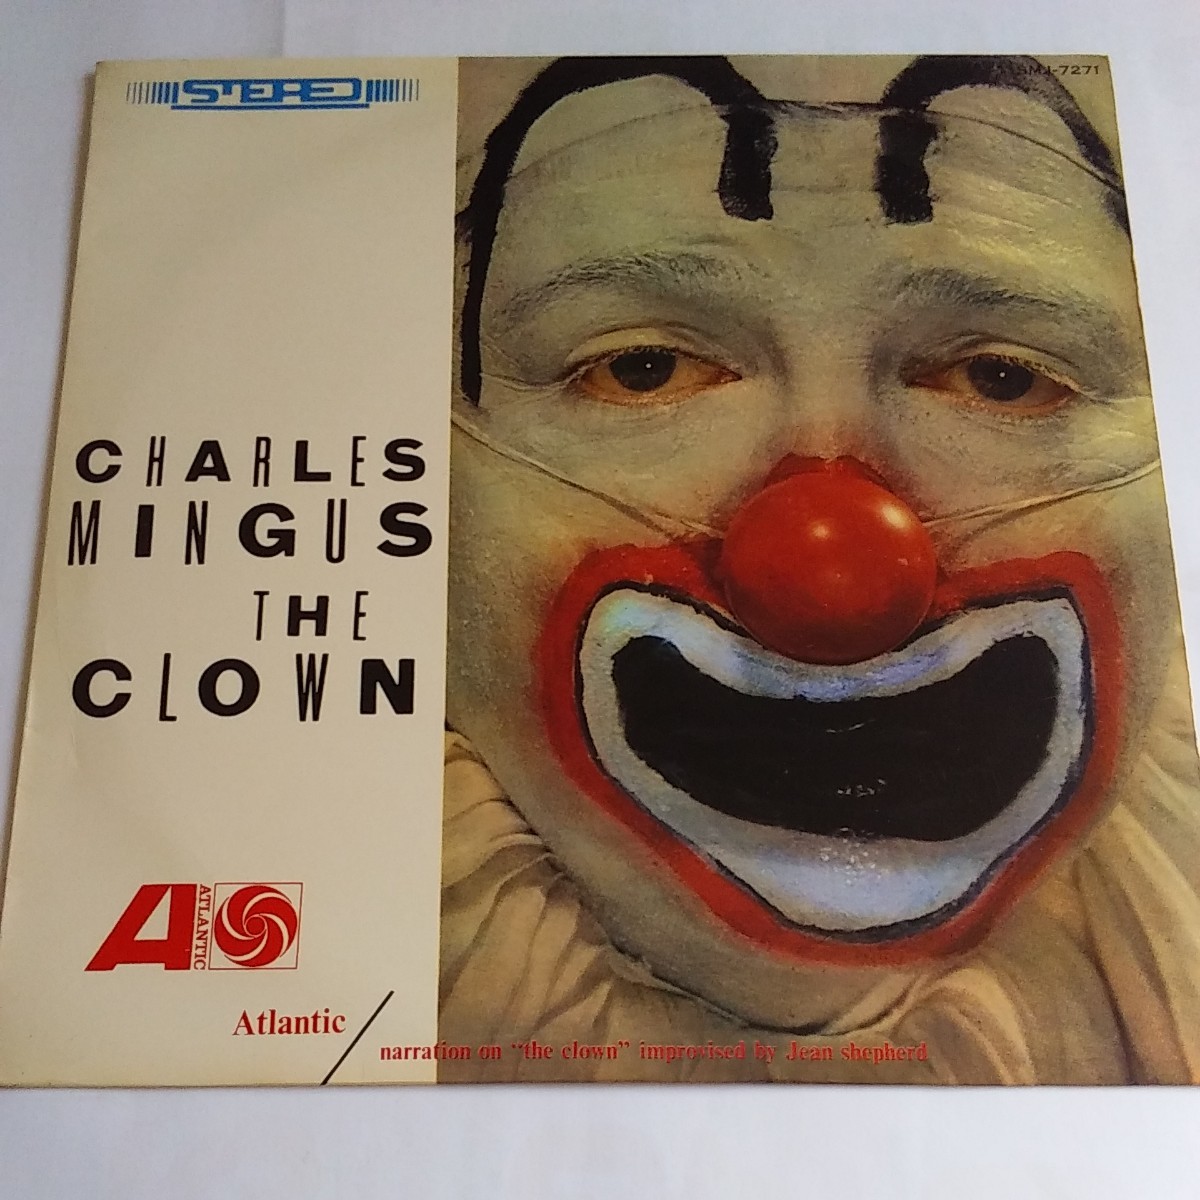 CHARLIES MINGUS THE CLOWN Atlantic narration on “the clown” improvised by Jean shepherd SMJ-7271日本ビクター株式会社¥1,800_画像1